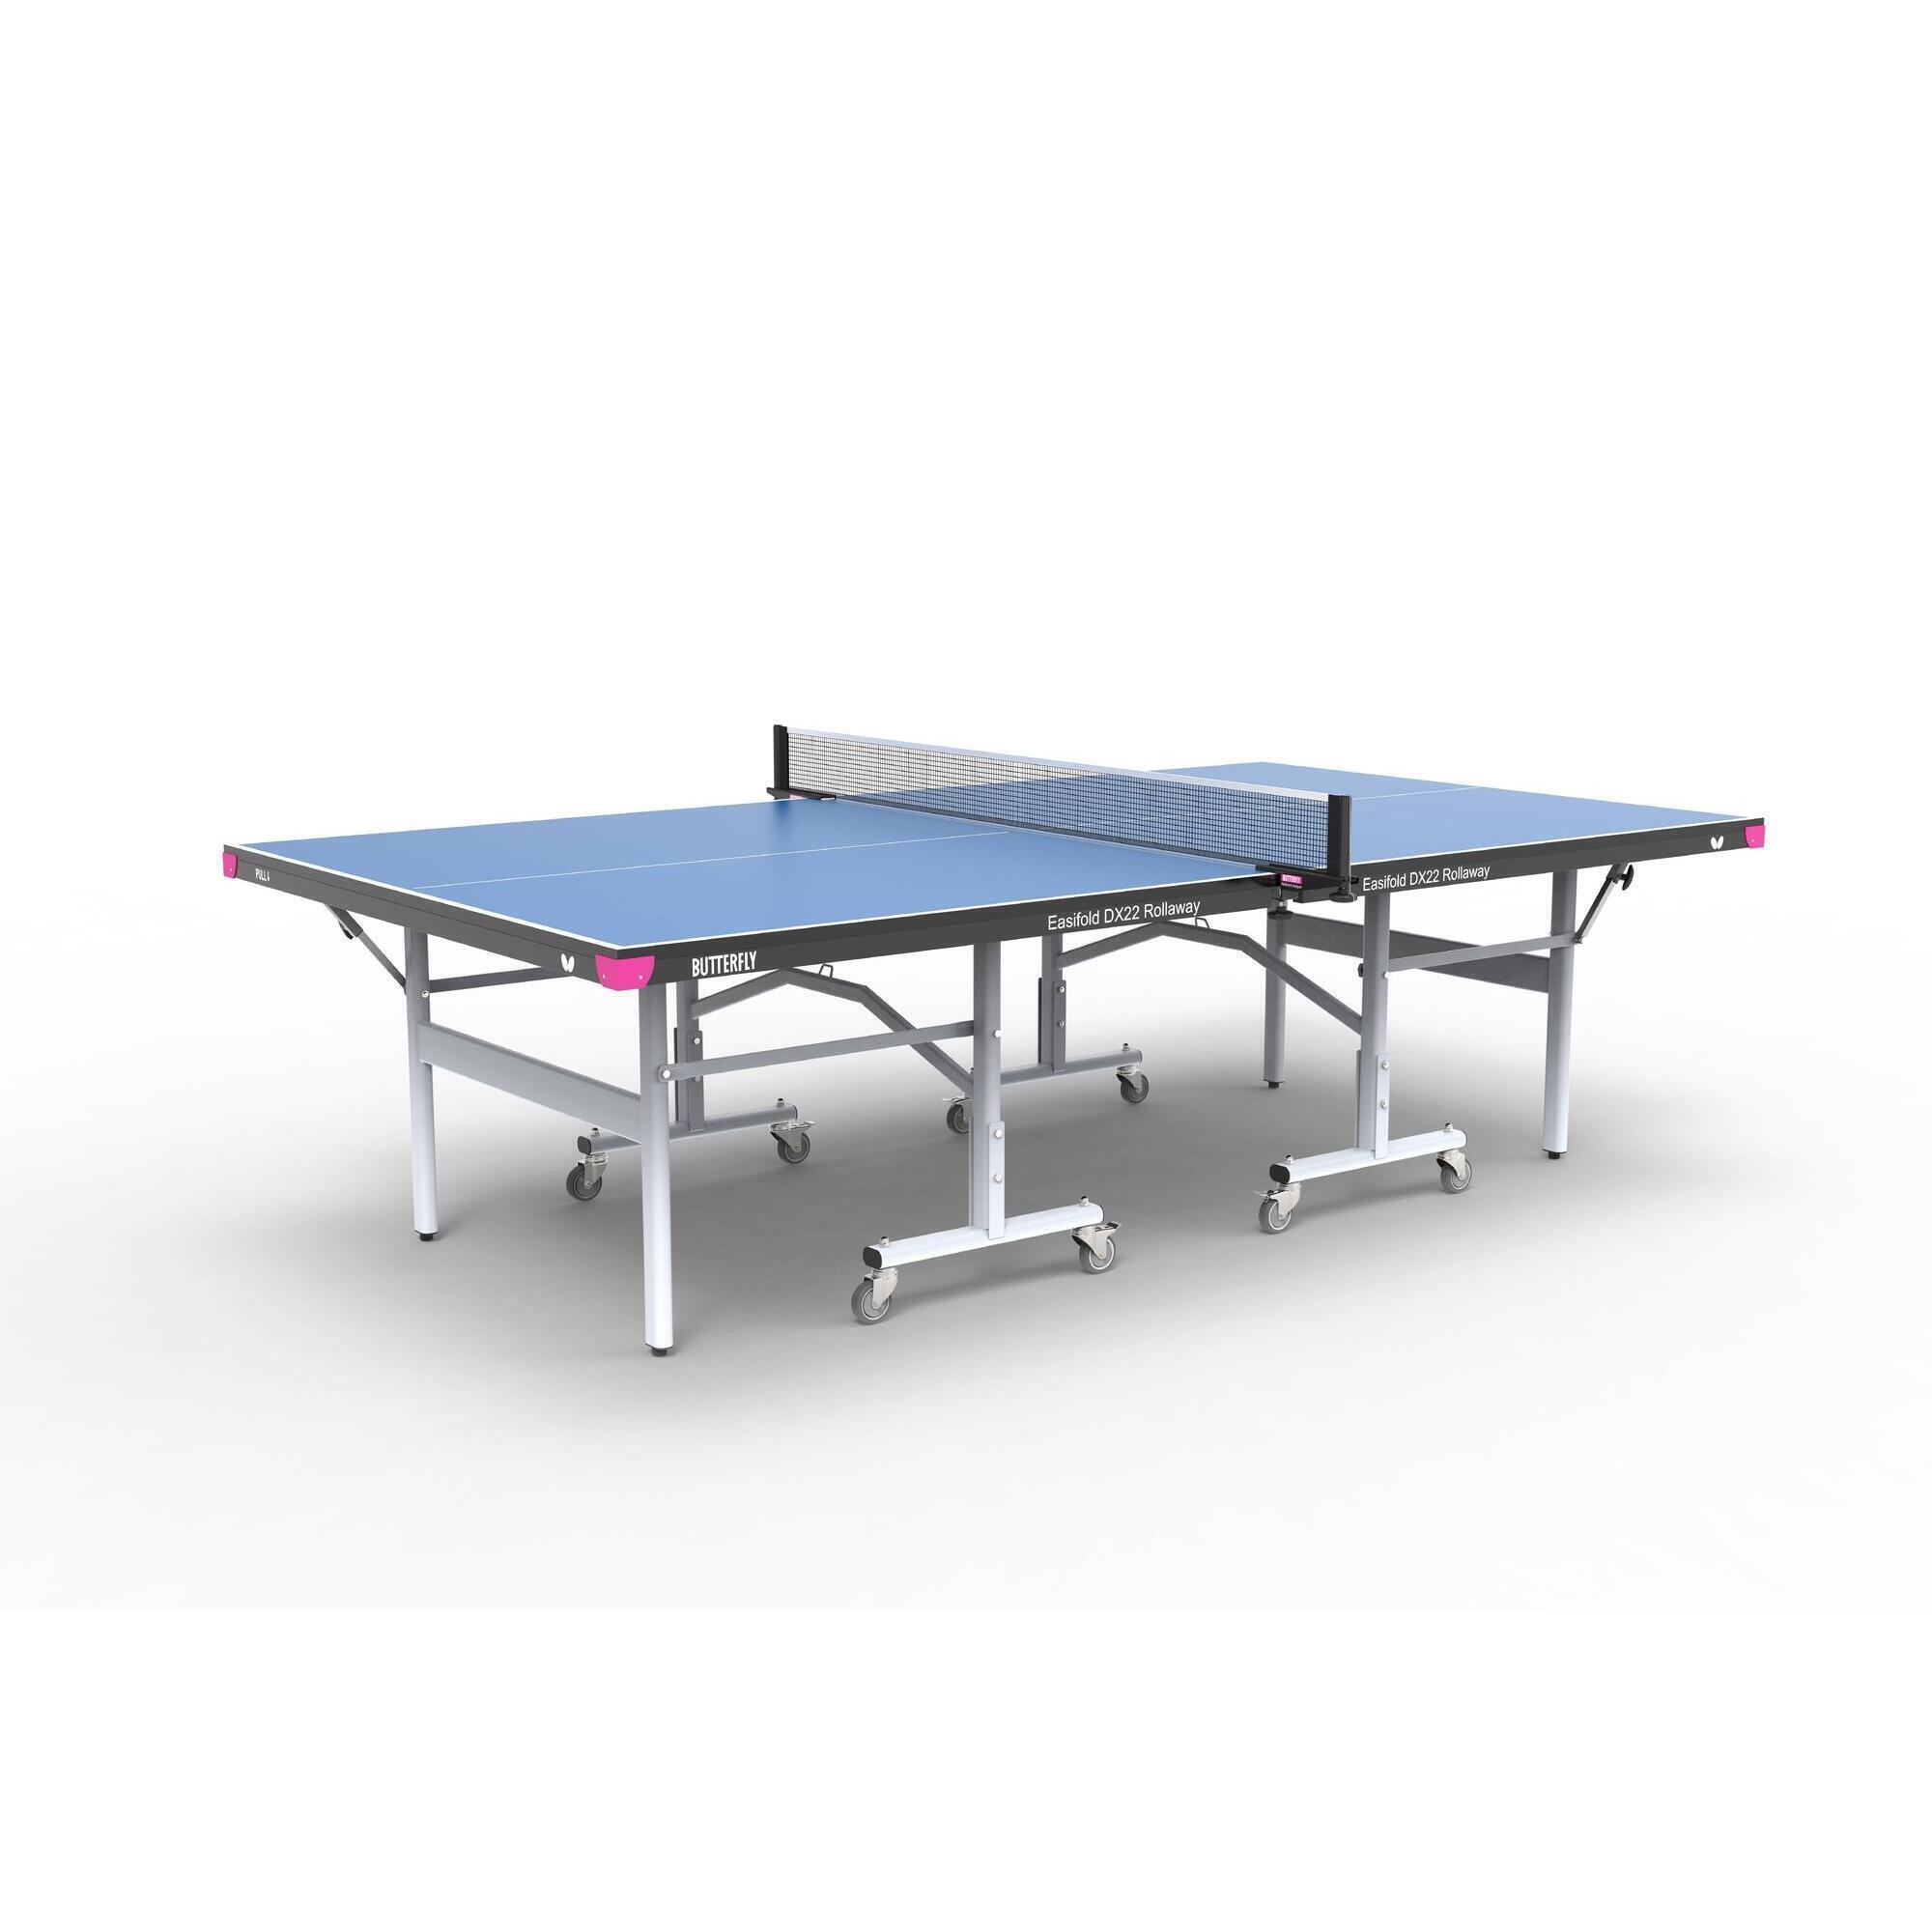 BUTTERFLY Butterfly Easifold Deluxe 22 Rollaway Table Tennis Table Blue